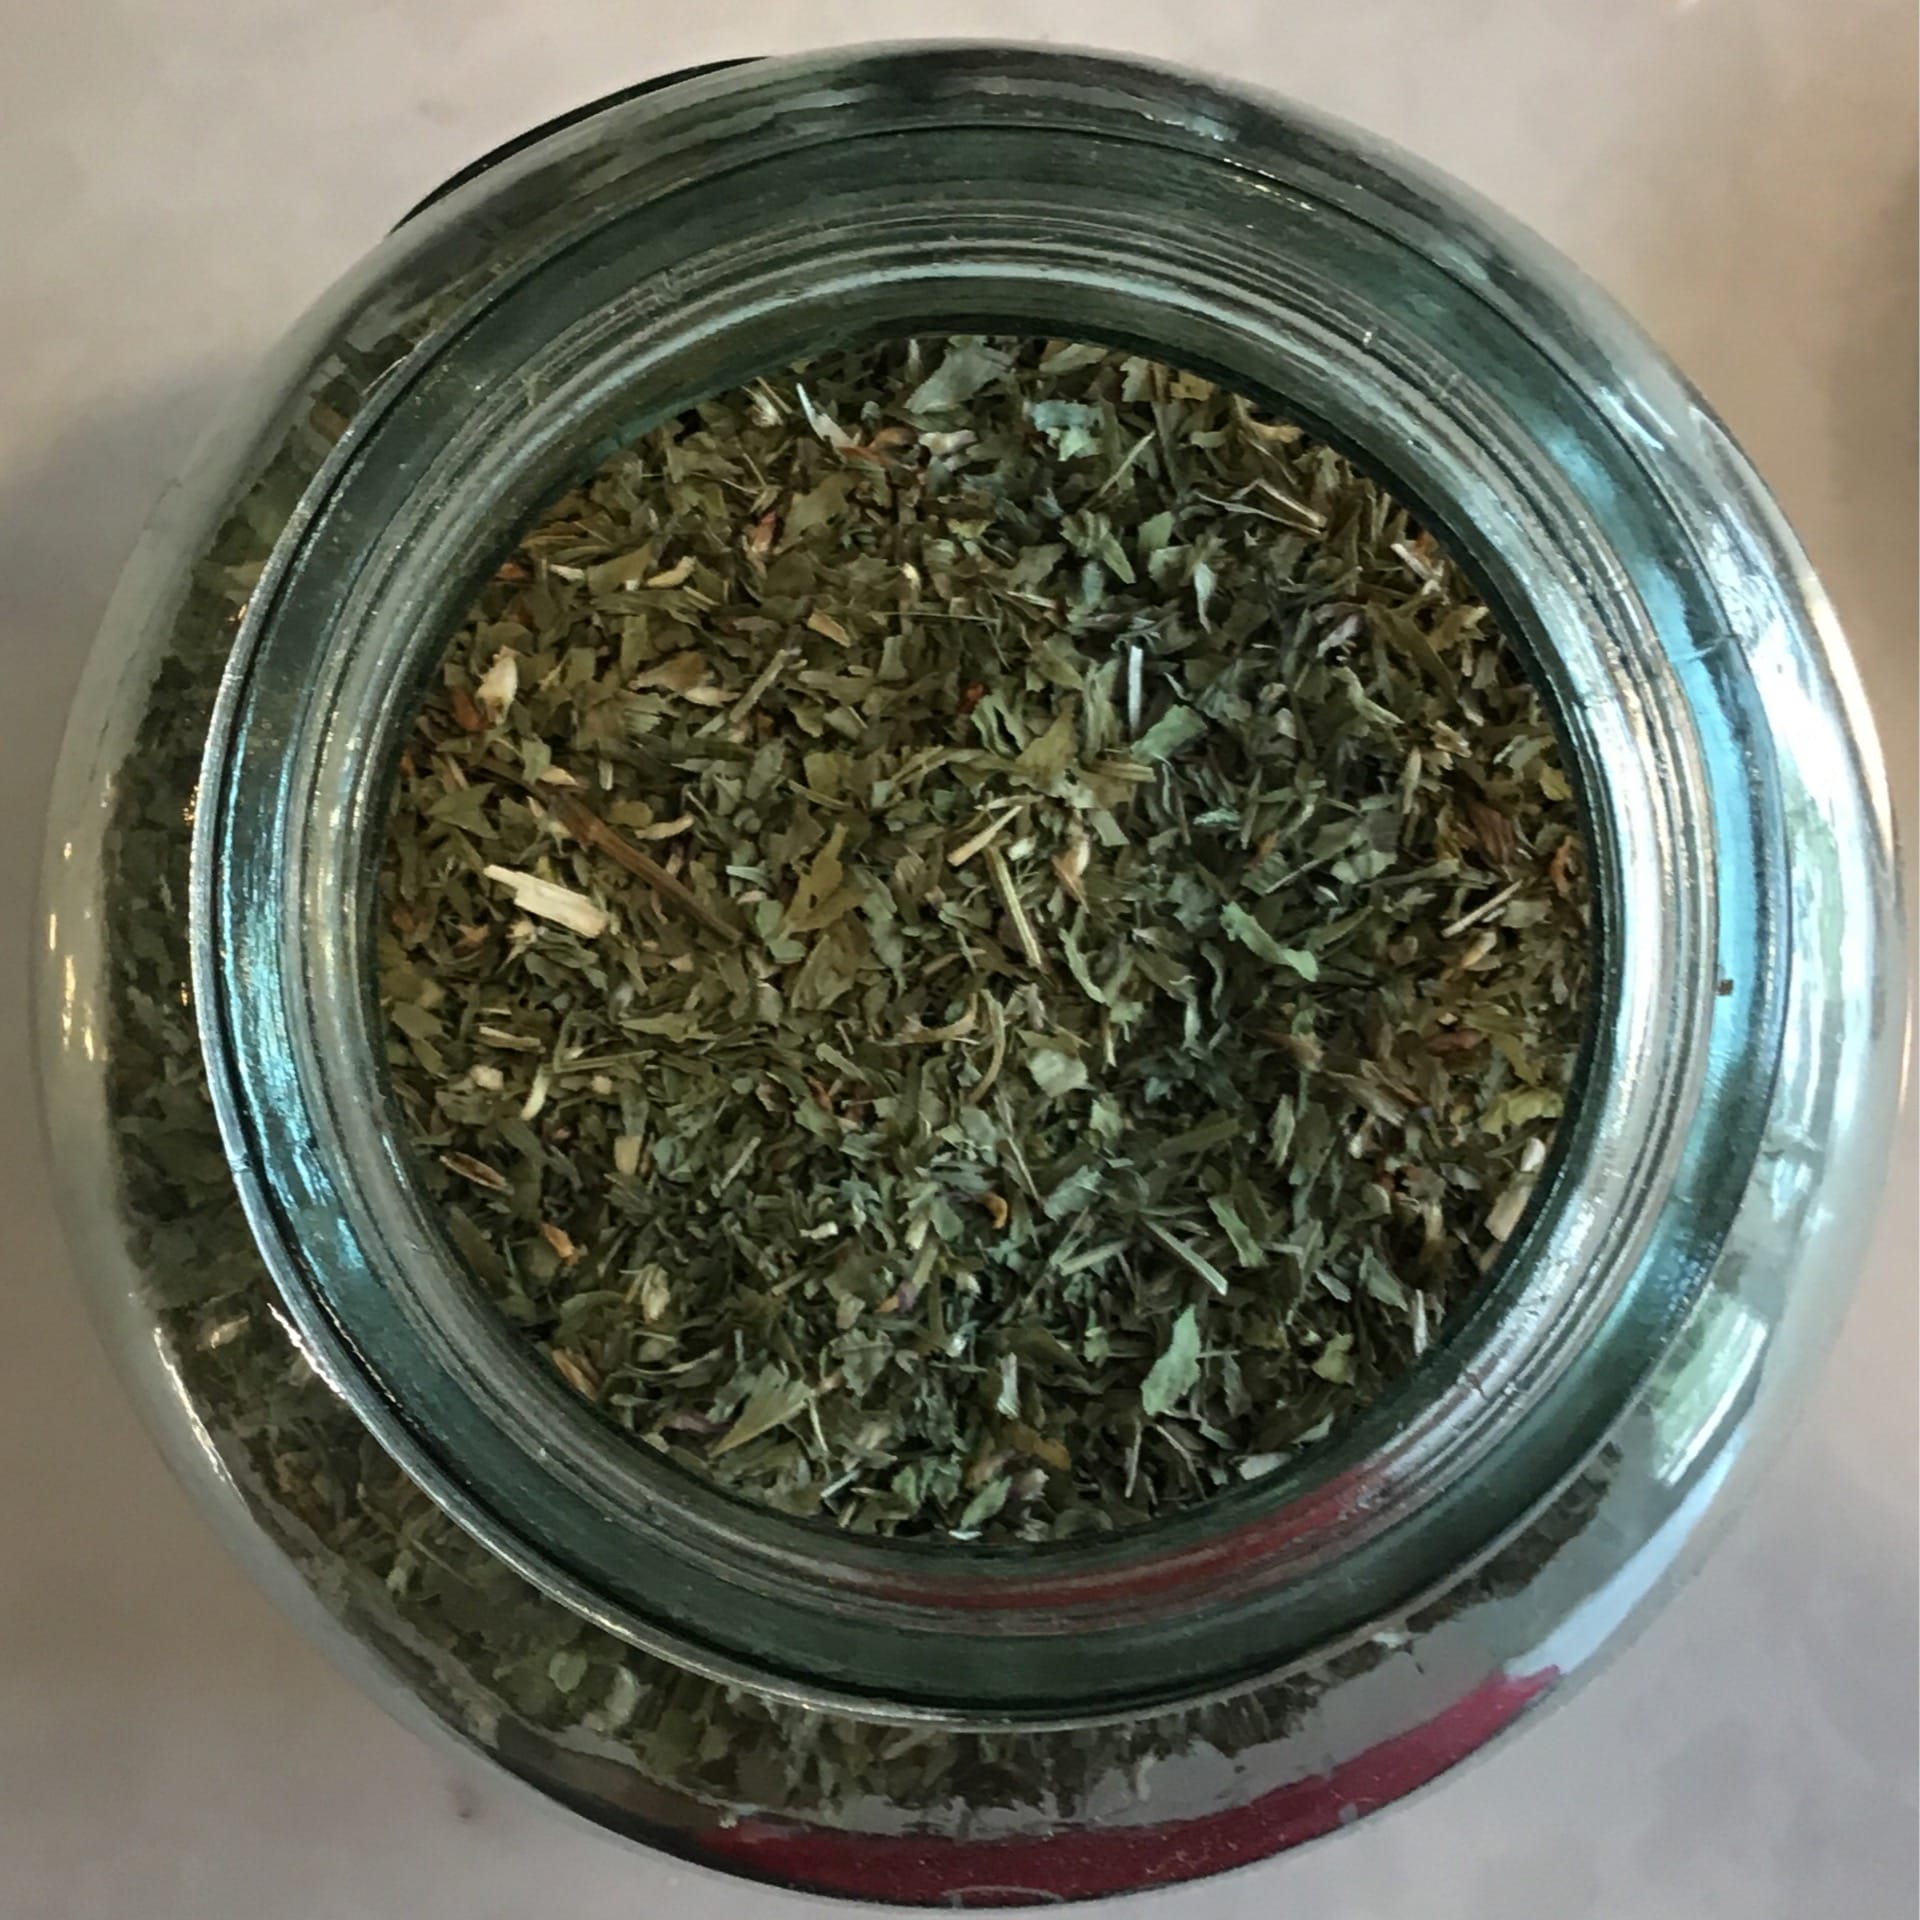 red clover herb 2 oz